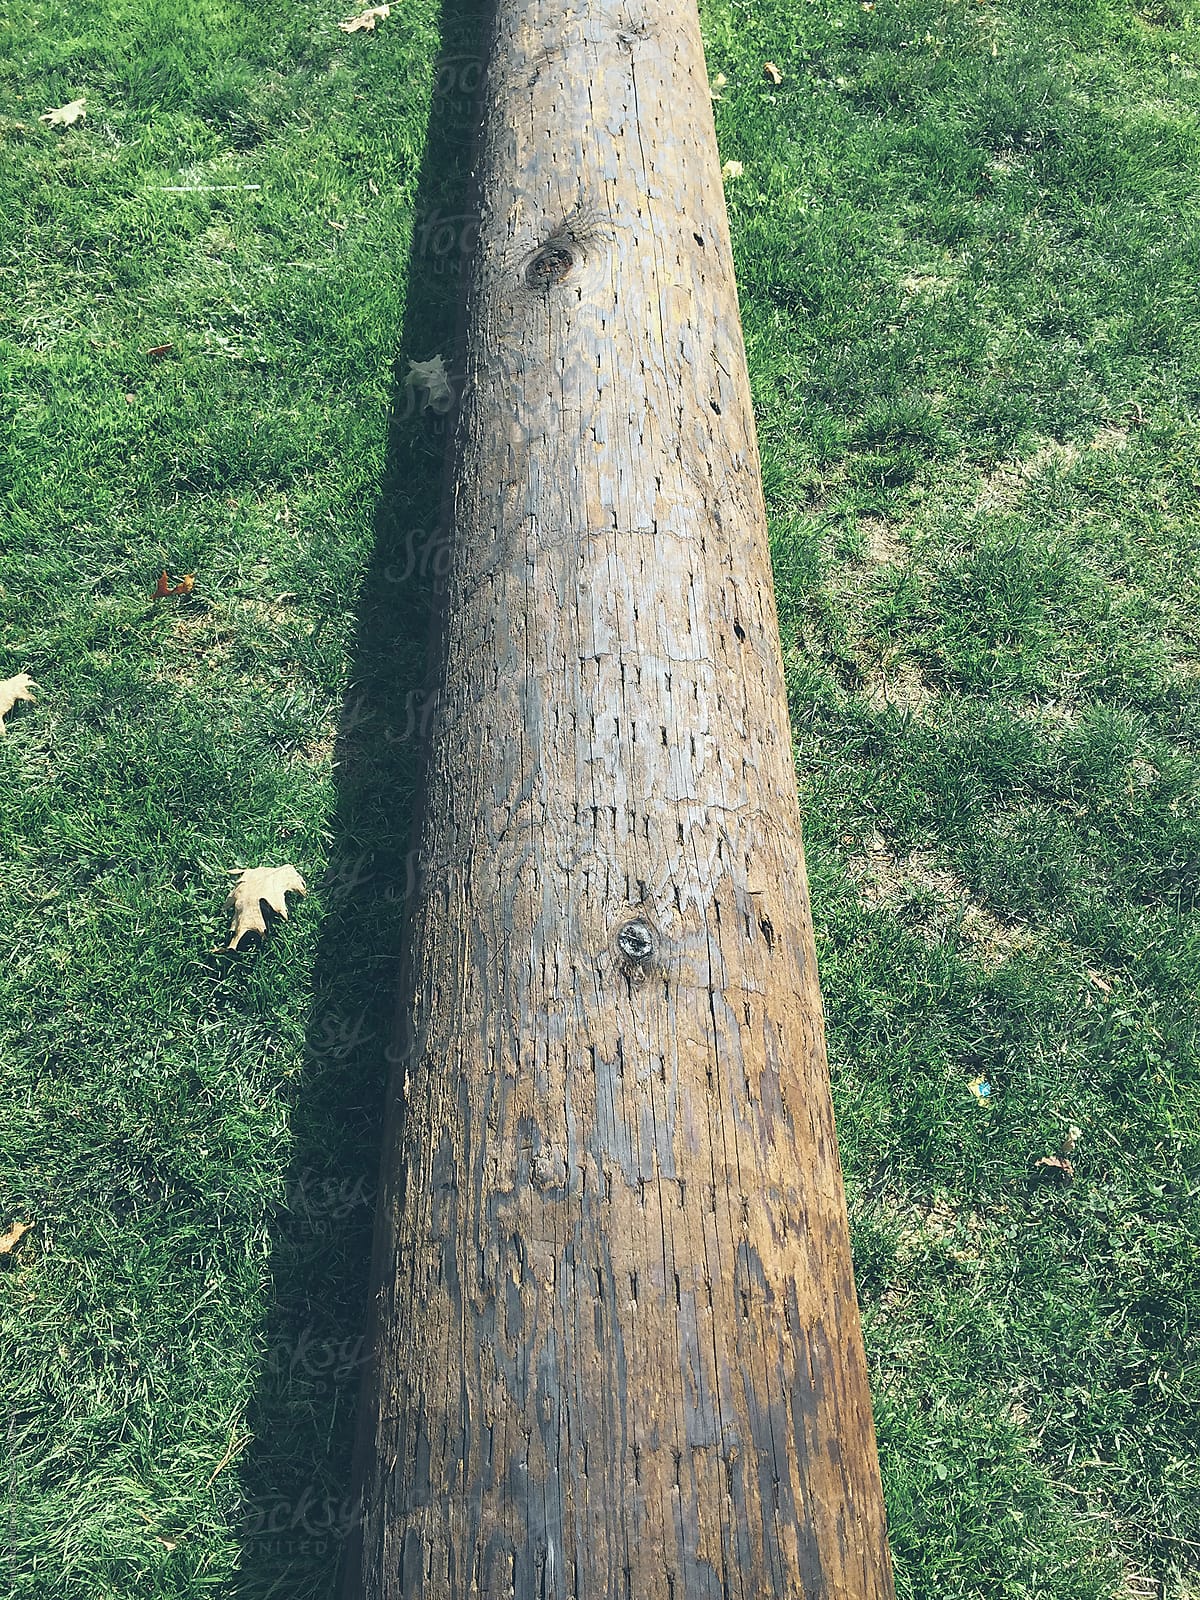 Wood utility pole on grass